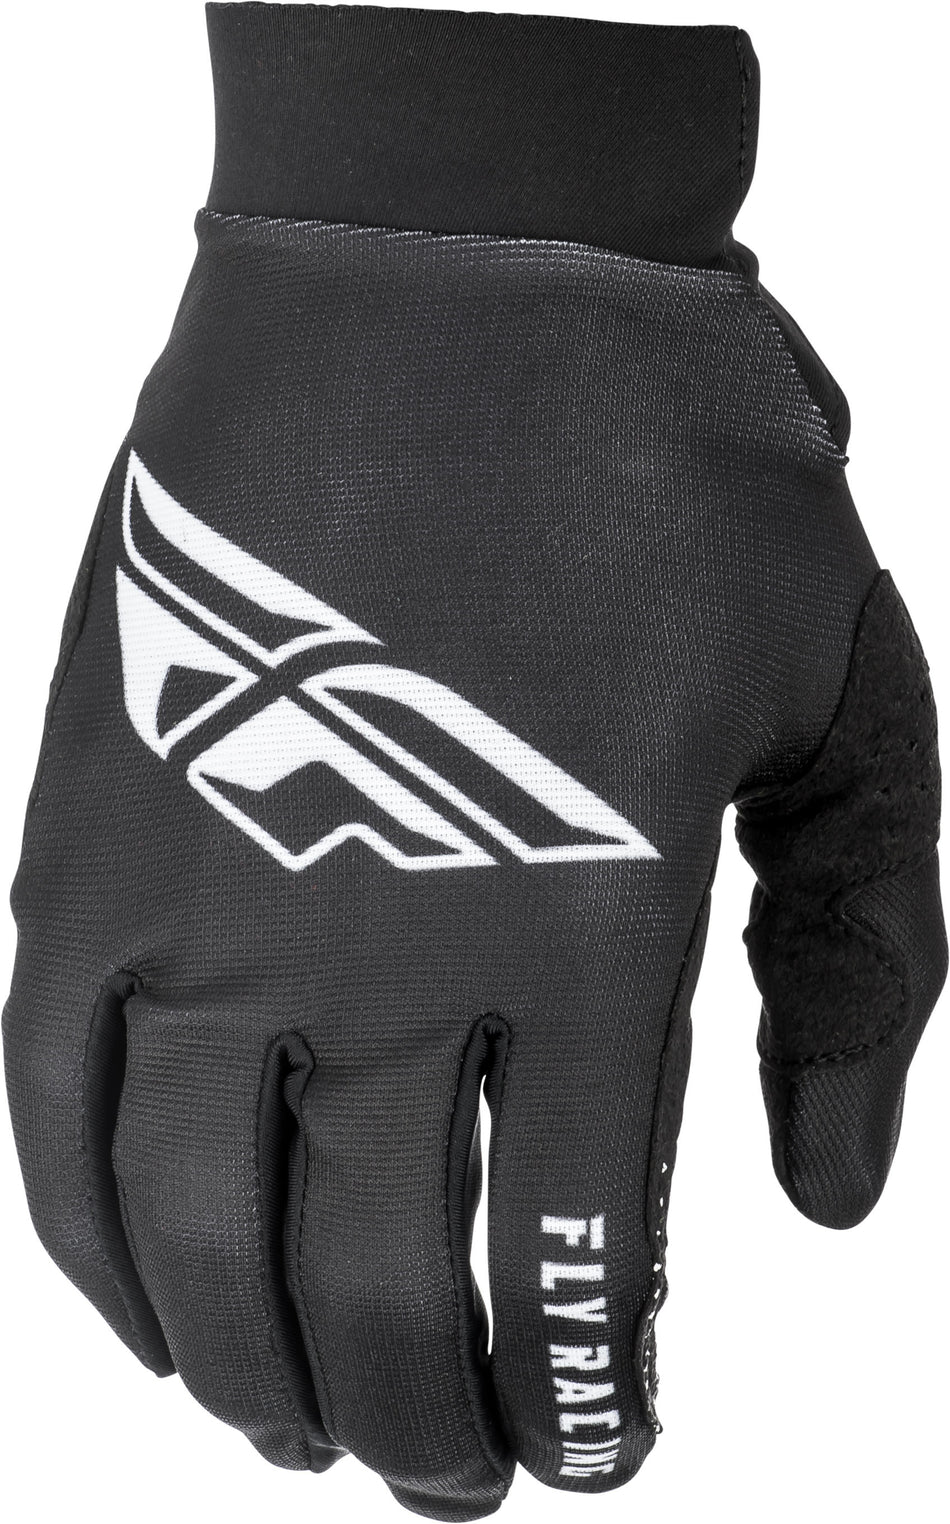 FLY RACING Pro Lite Gloves Black/White Sz 09 372-81009